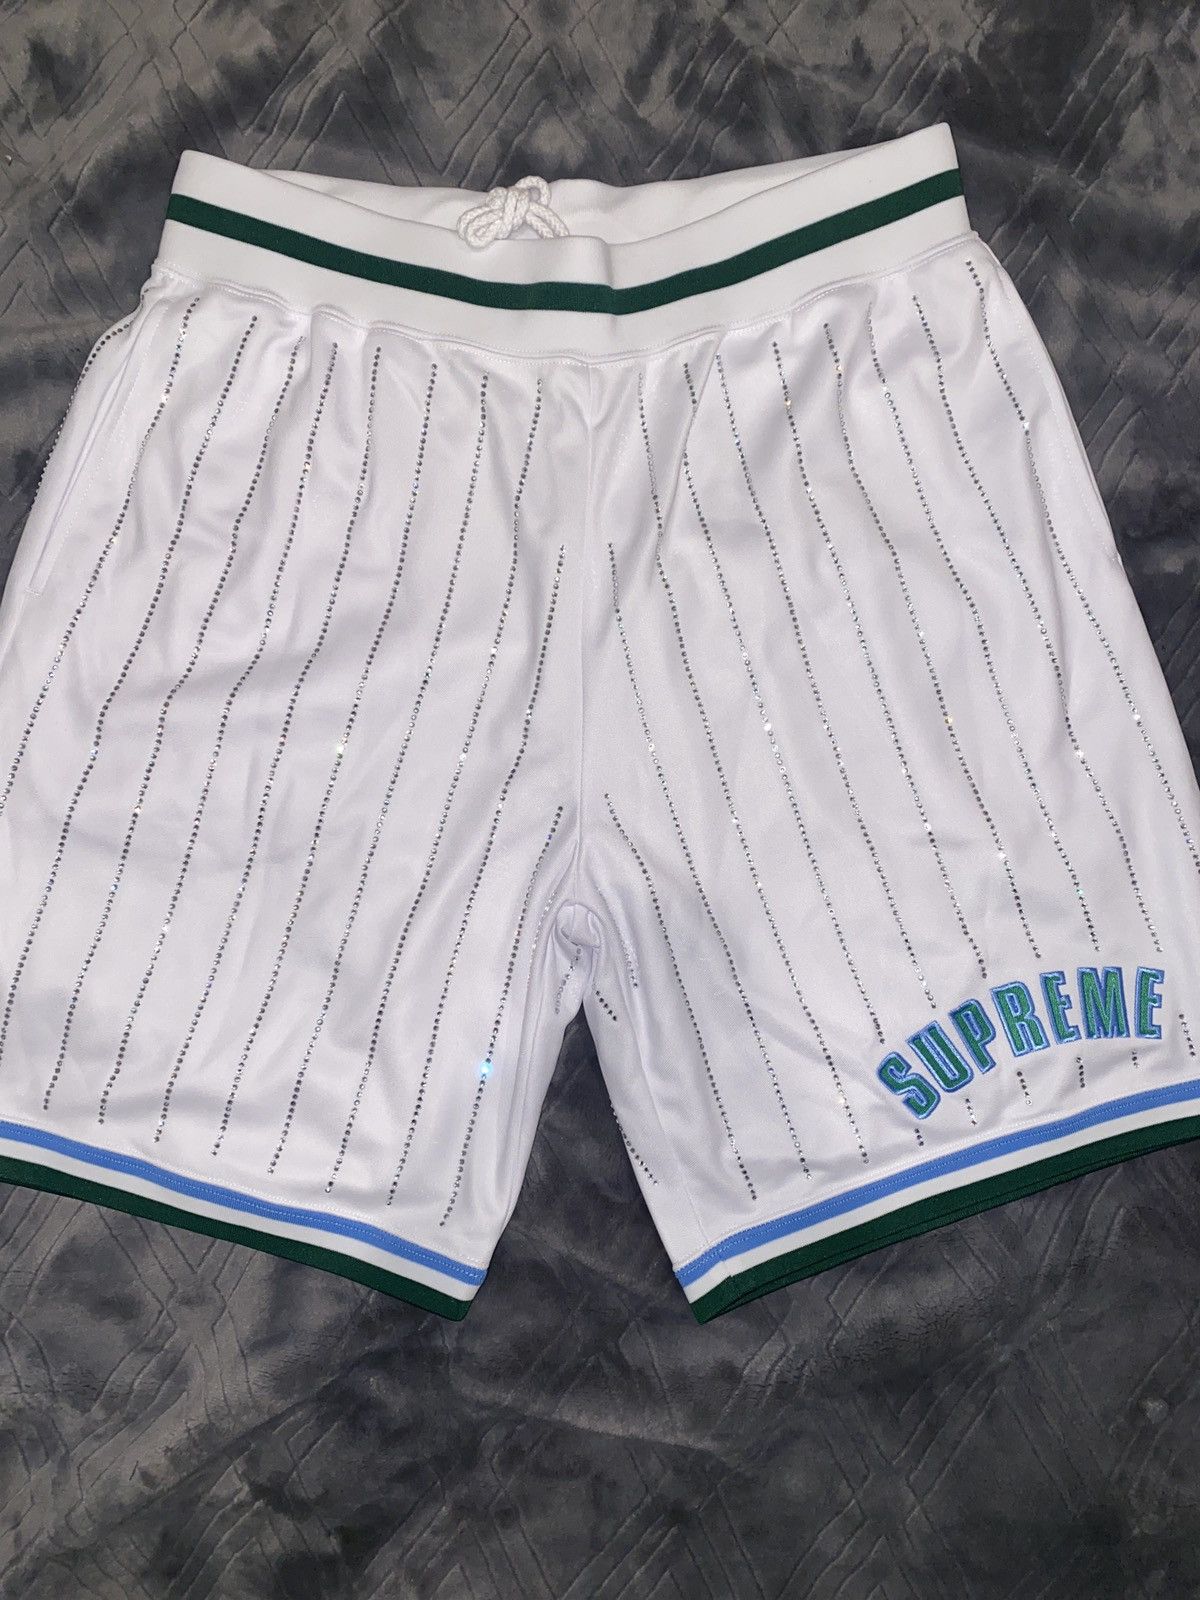 Supreme Supreme rhinestone stripe basketball shorts | Grailed